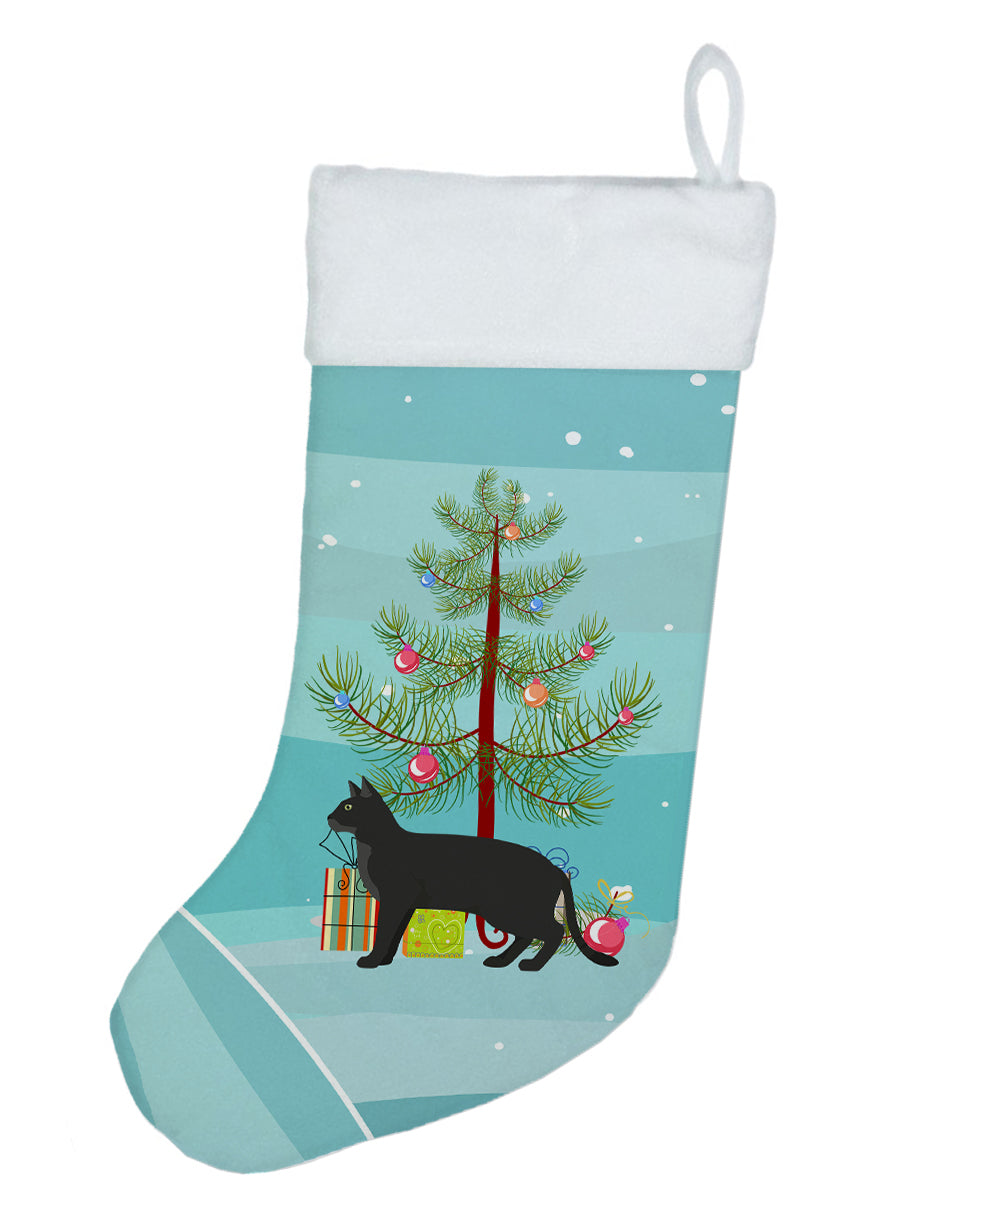 Chausie Black Cat Merry Christmas Christmas Stocking  the-store.com.